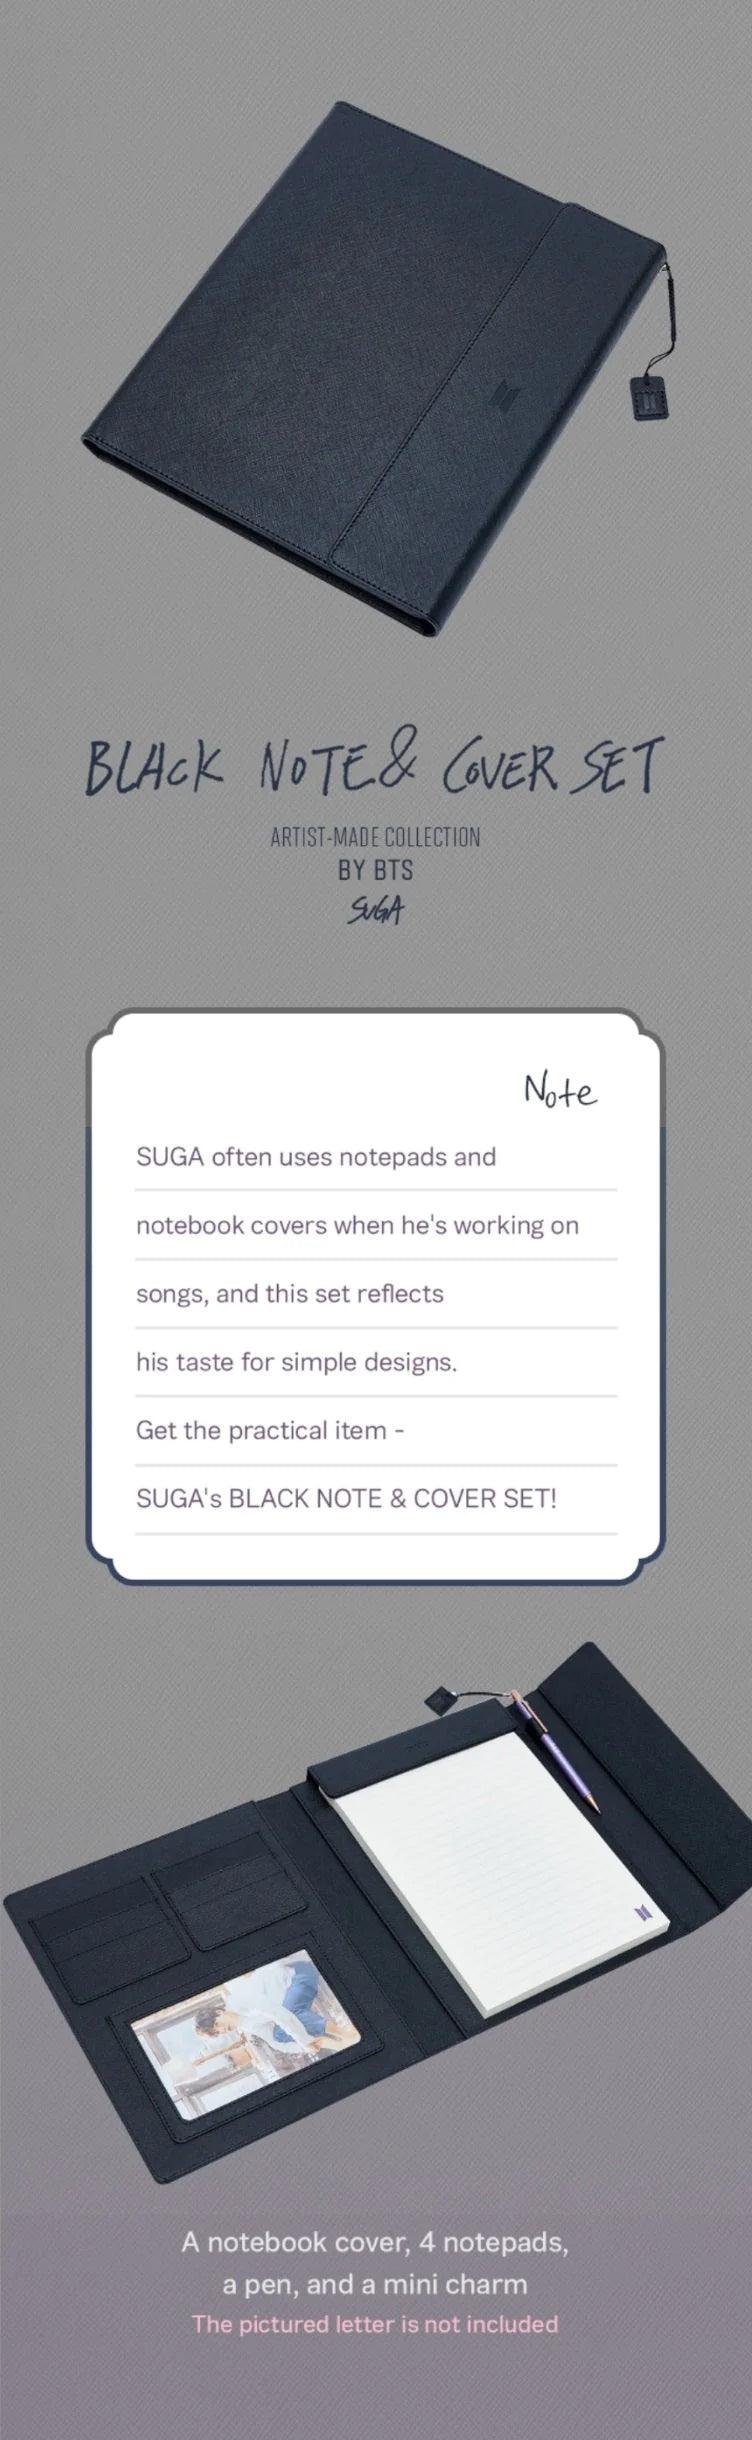 [2nd PRE ORDER] BTS - ARTIST-MADE COLLECTION by SUGA- Block Note + Cover Set - KAEPJJANG SHOP (캡짱 숍)